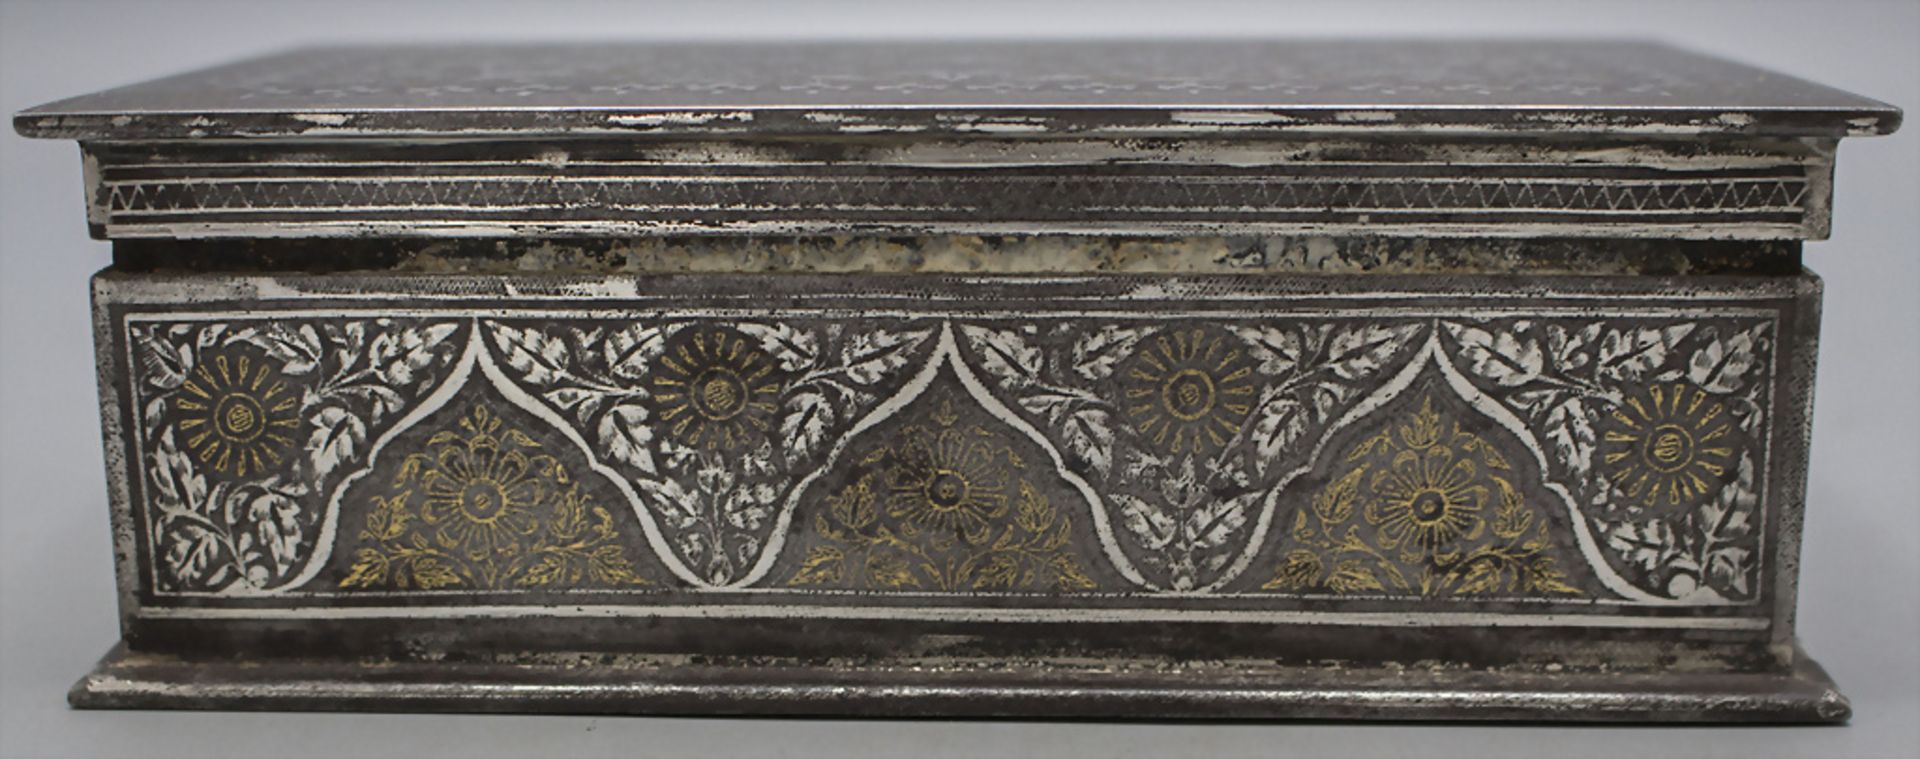 Orientalische Schatulle / An Oriental box, 19./20. Jh. - Image 2 of 6